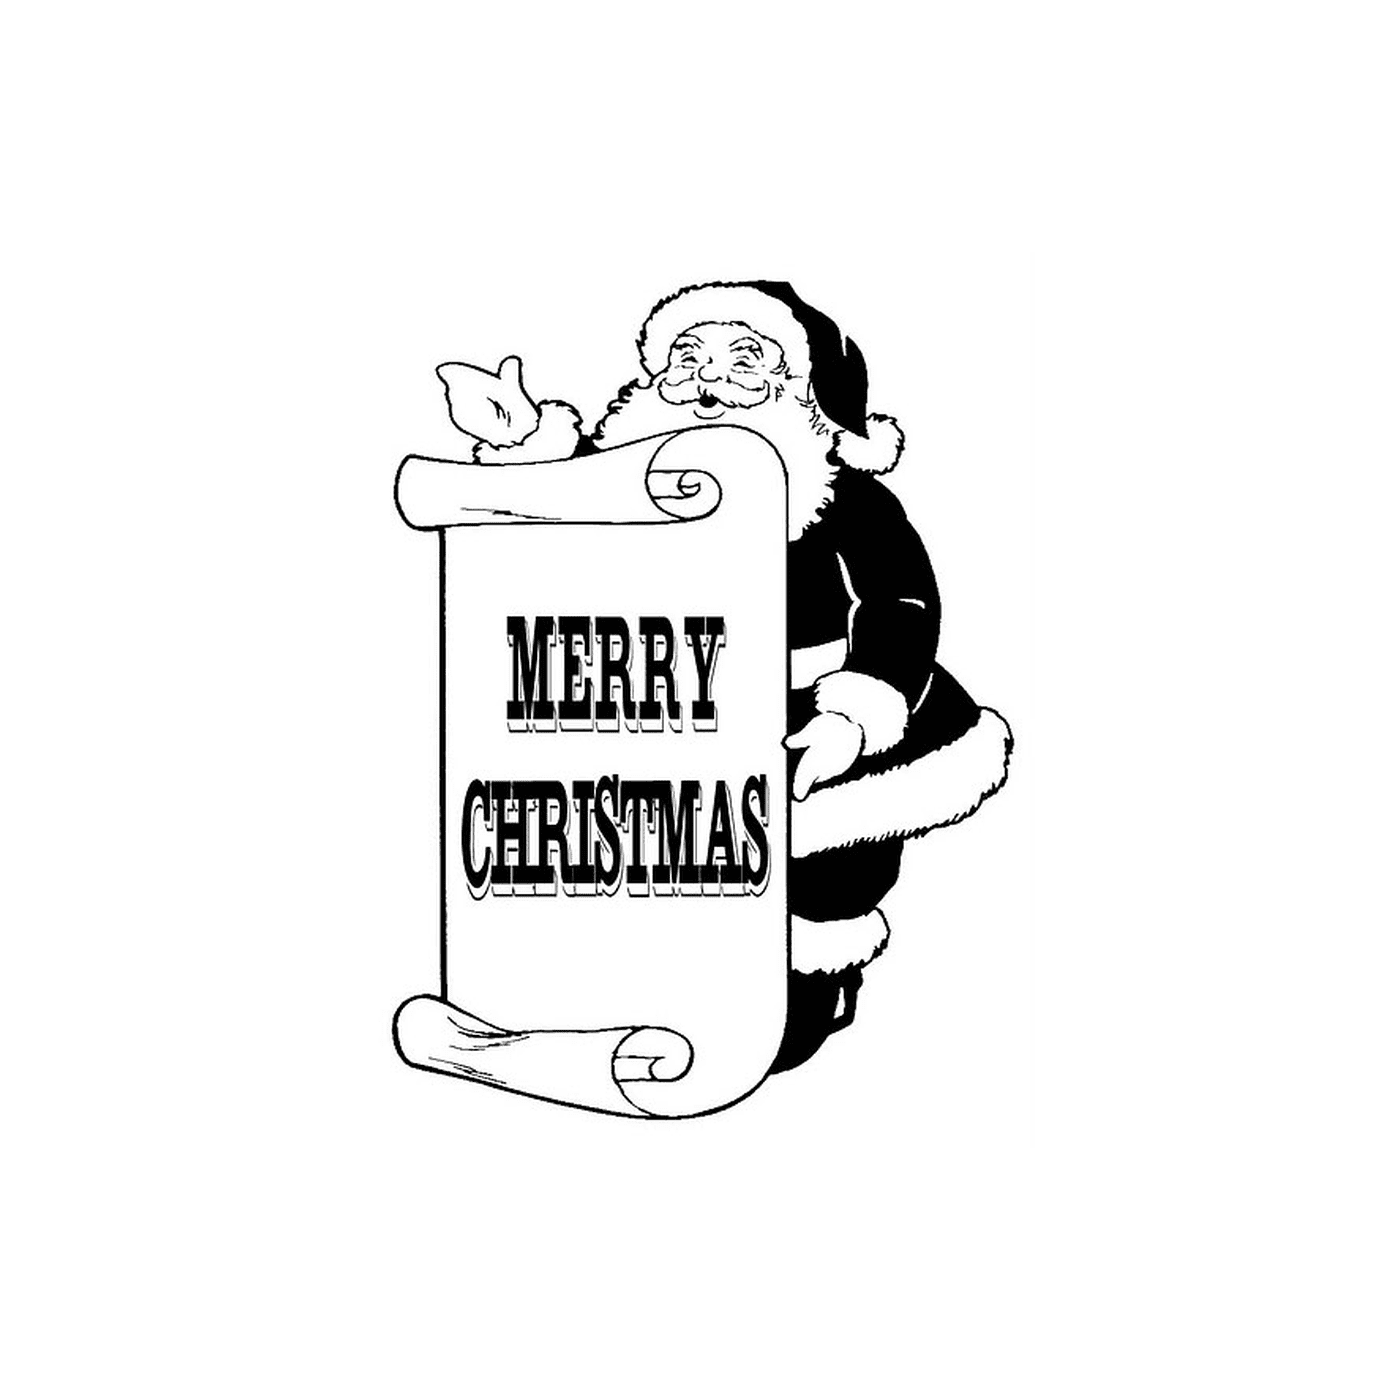  A merry Christmas 